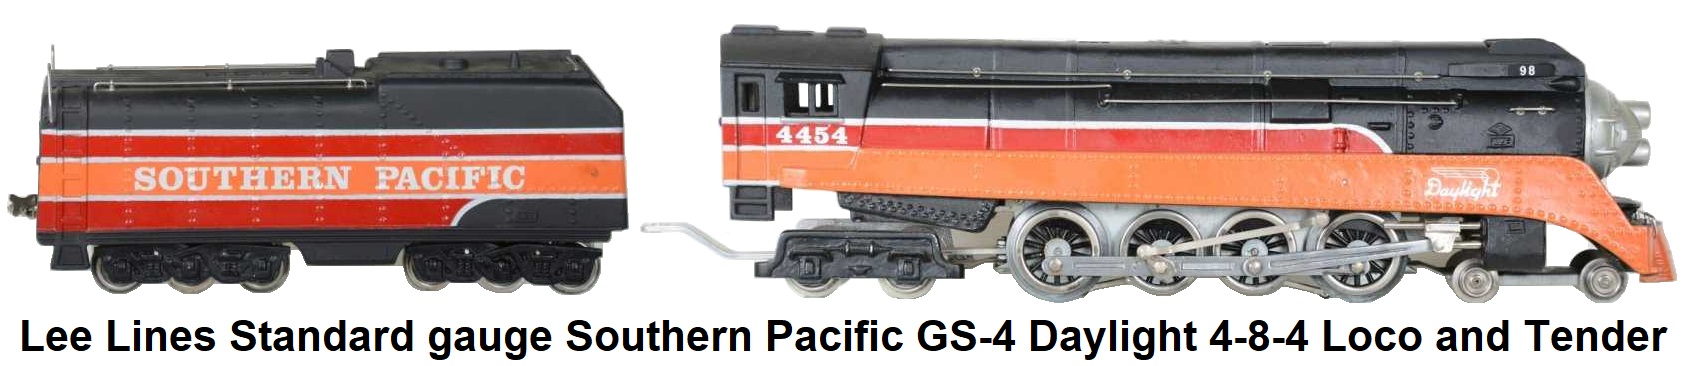 Lee Lines Standard gauge 4-8-4 Southern Pacific Daylight GS-4 Locomotive & Tender